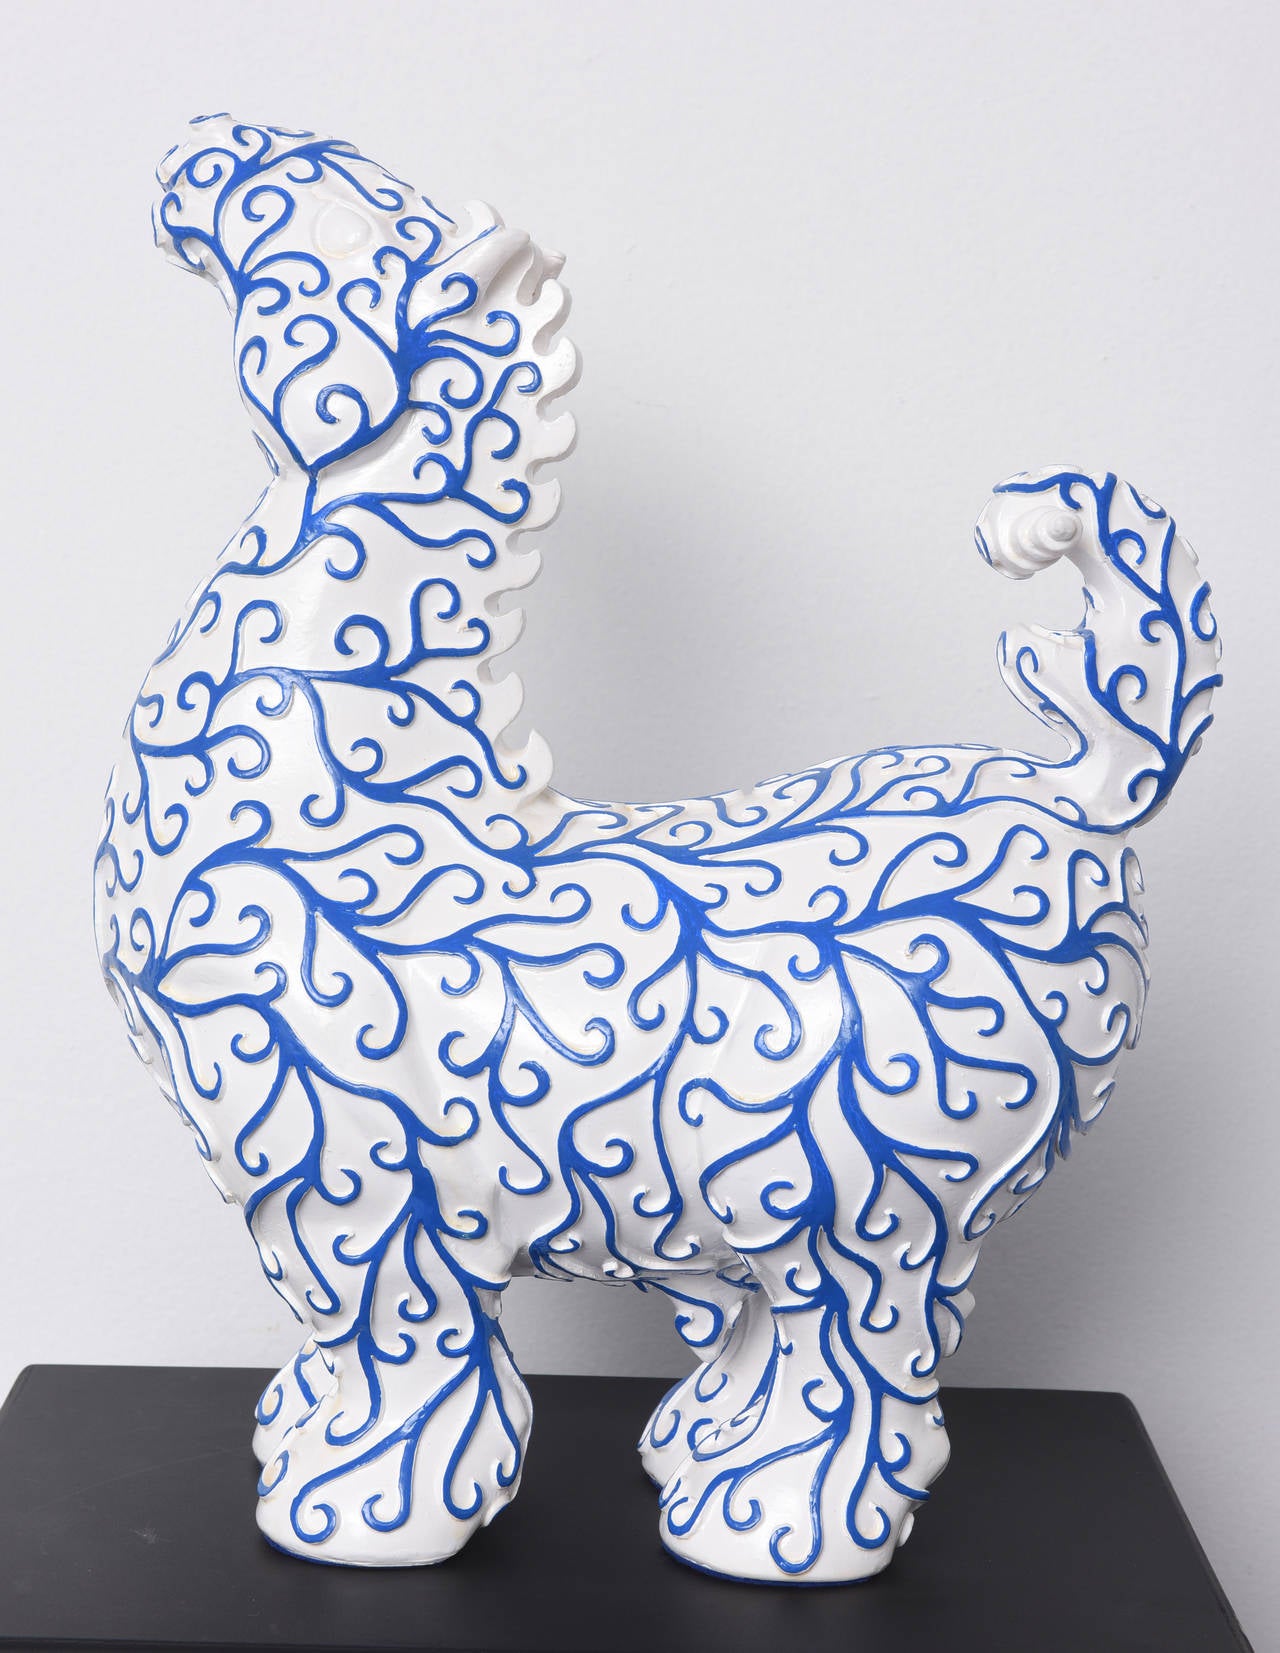 Arabesques Horse - Blue & White Resin sculpture - Sculpture by Patrick Schumacher